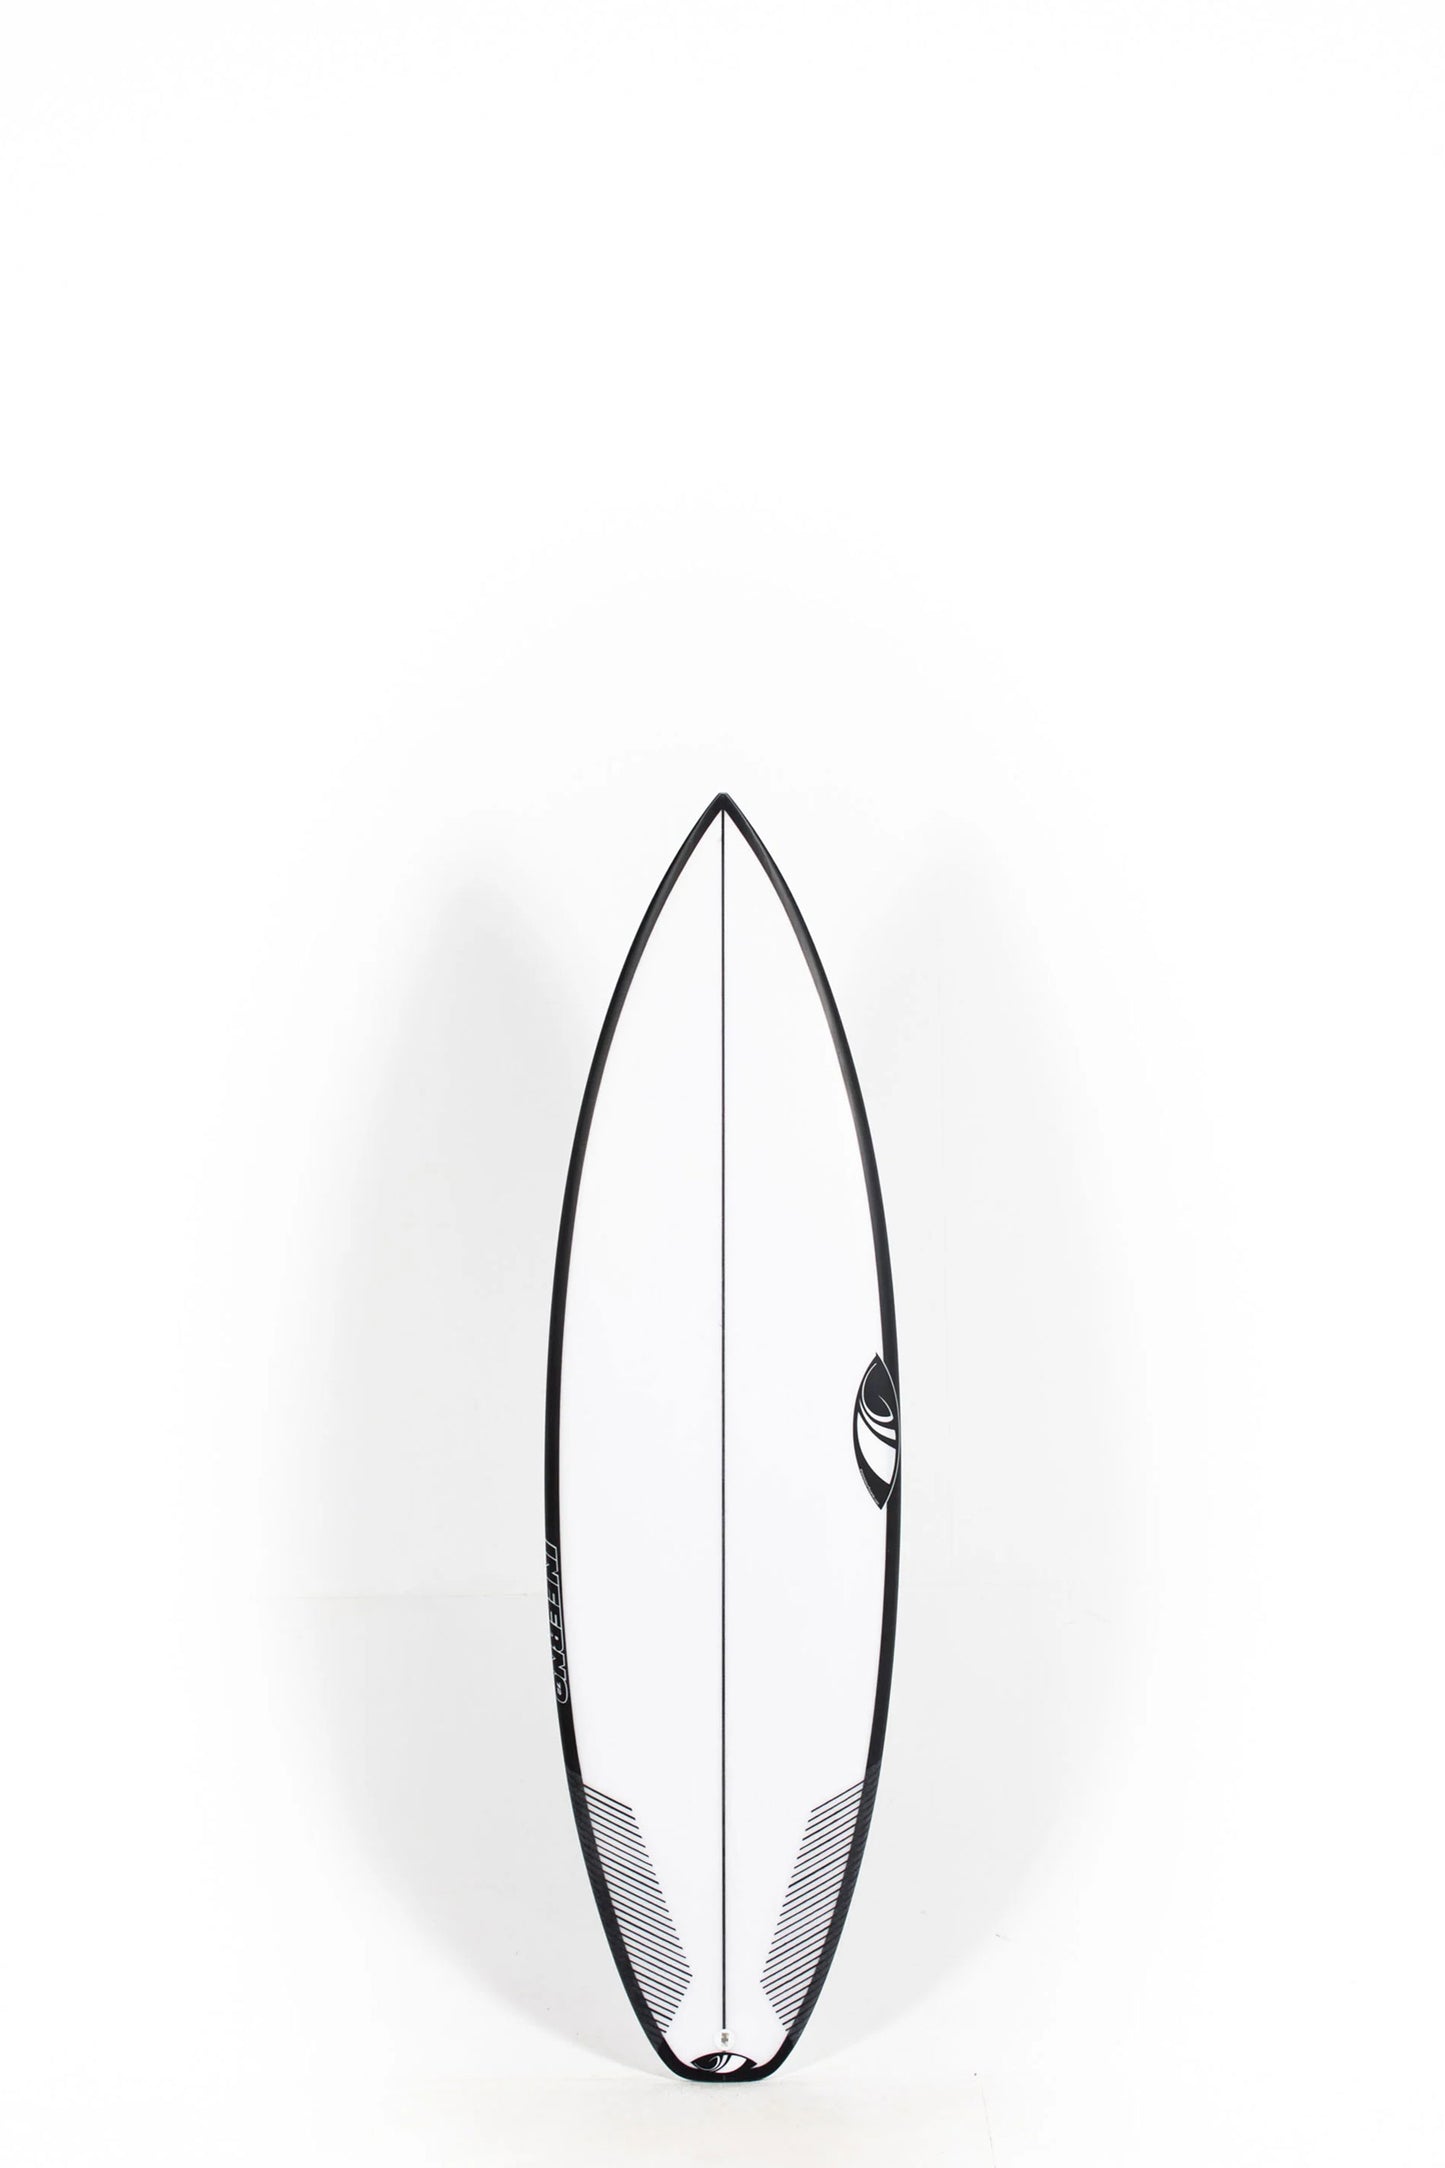 Sharp Eye Surfboards - INFERNO 72 PRO by Marcio Zouvi 5'8